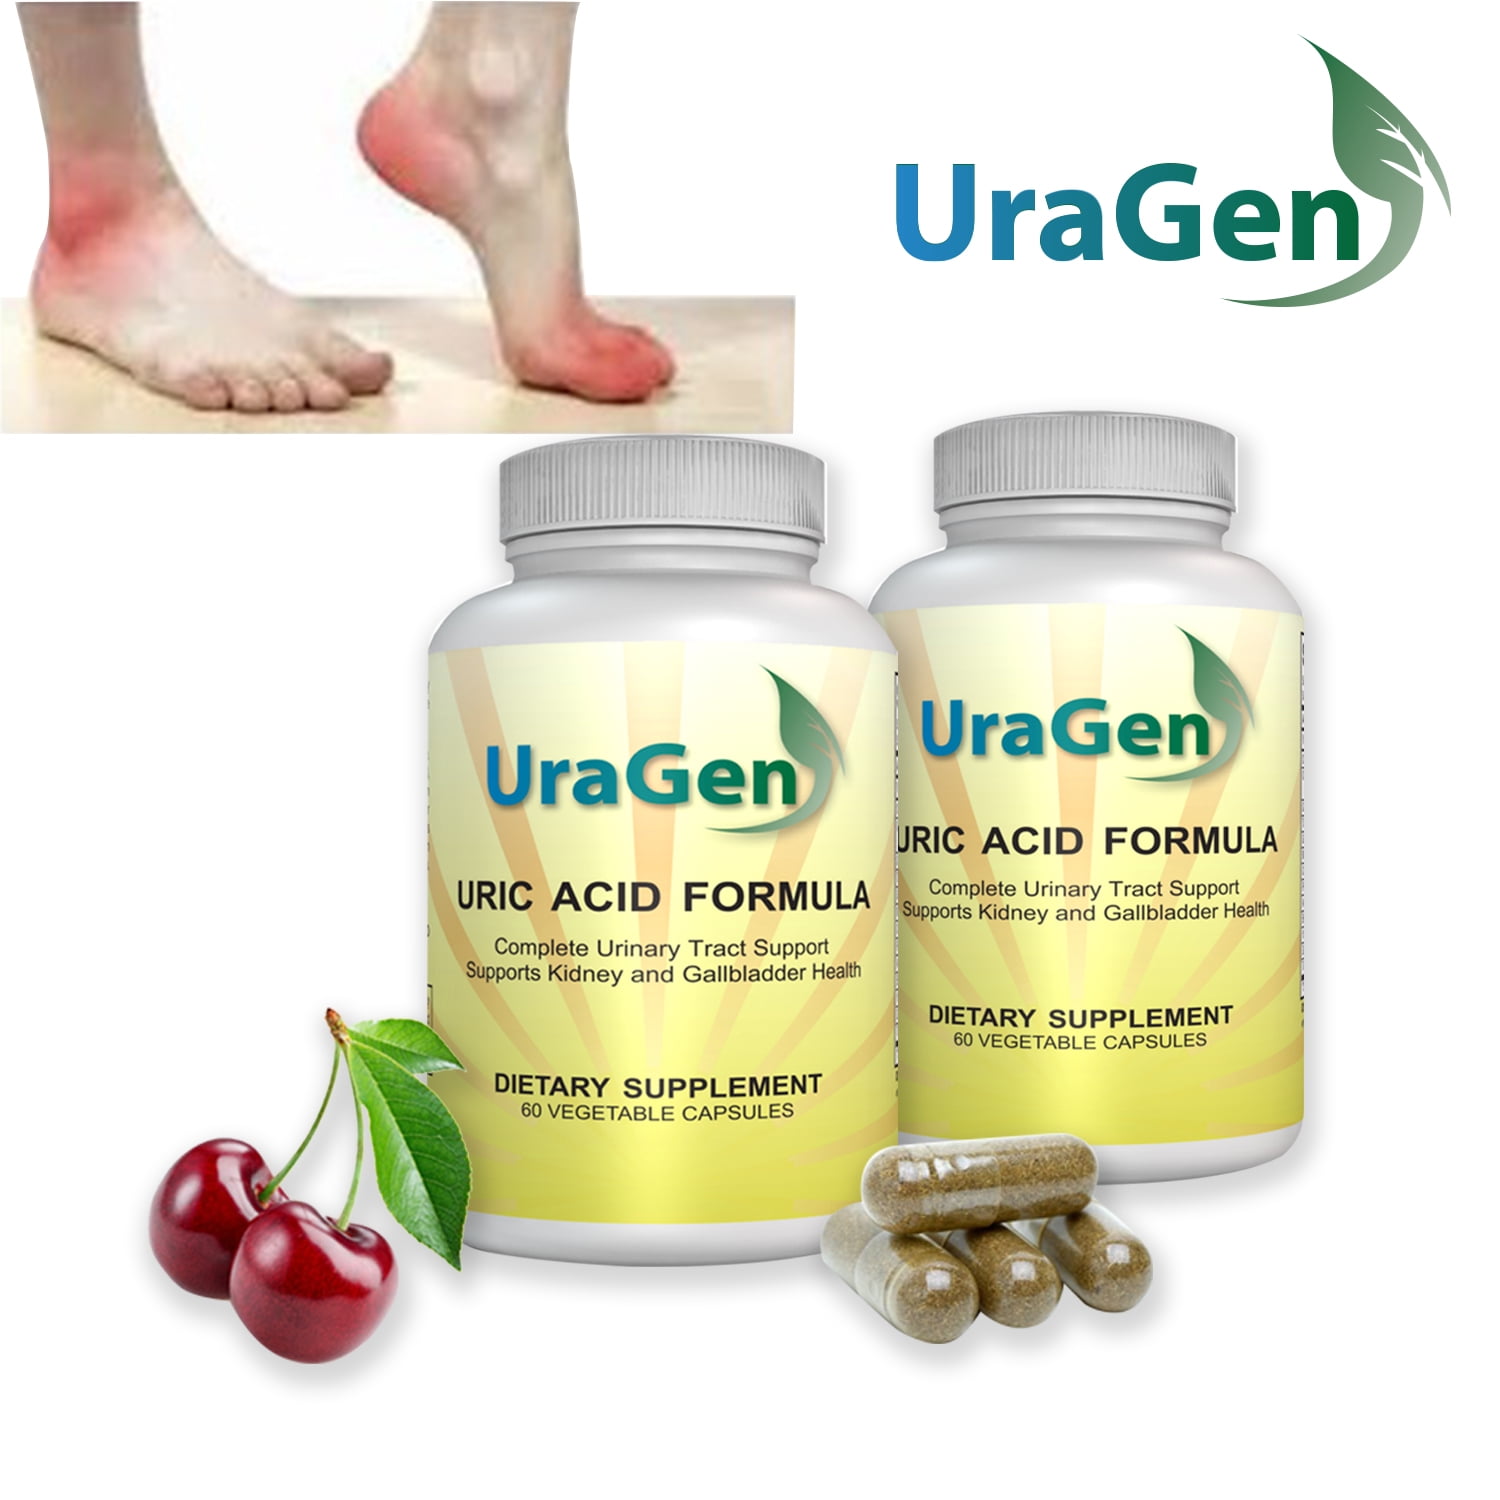 Uric Acid Support Vegetarian Capsules 2 Bottles (120 count) - Promotes Heal...